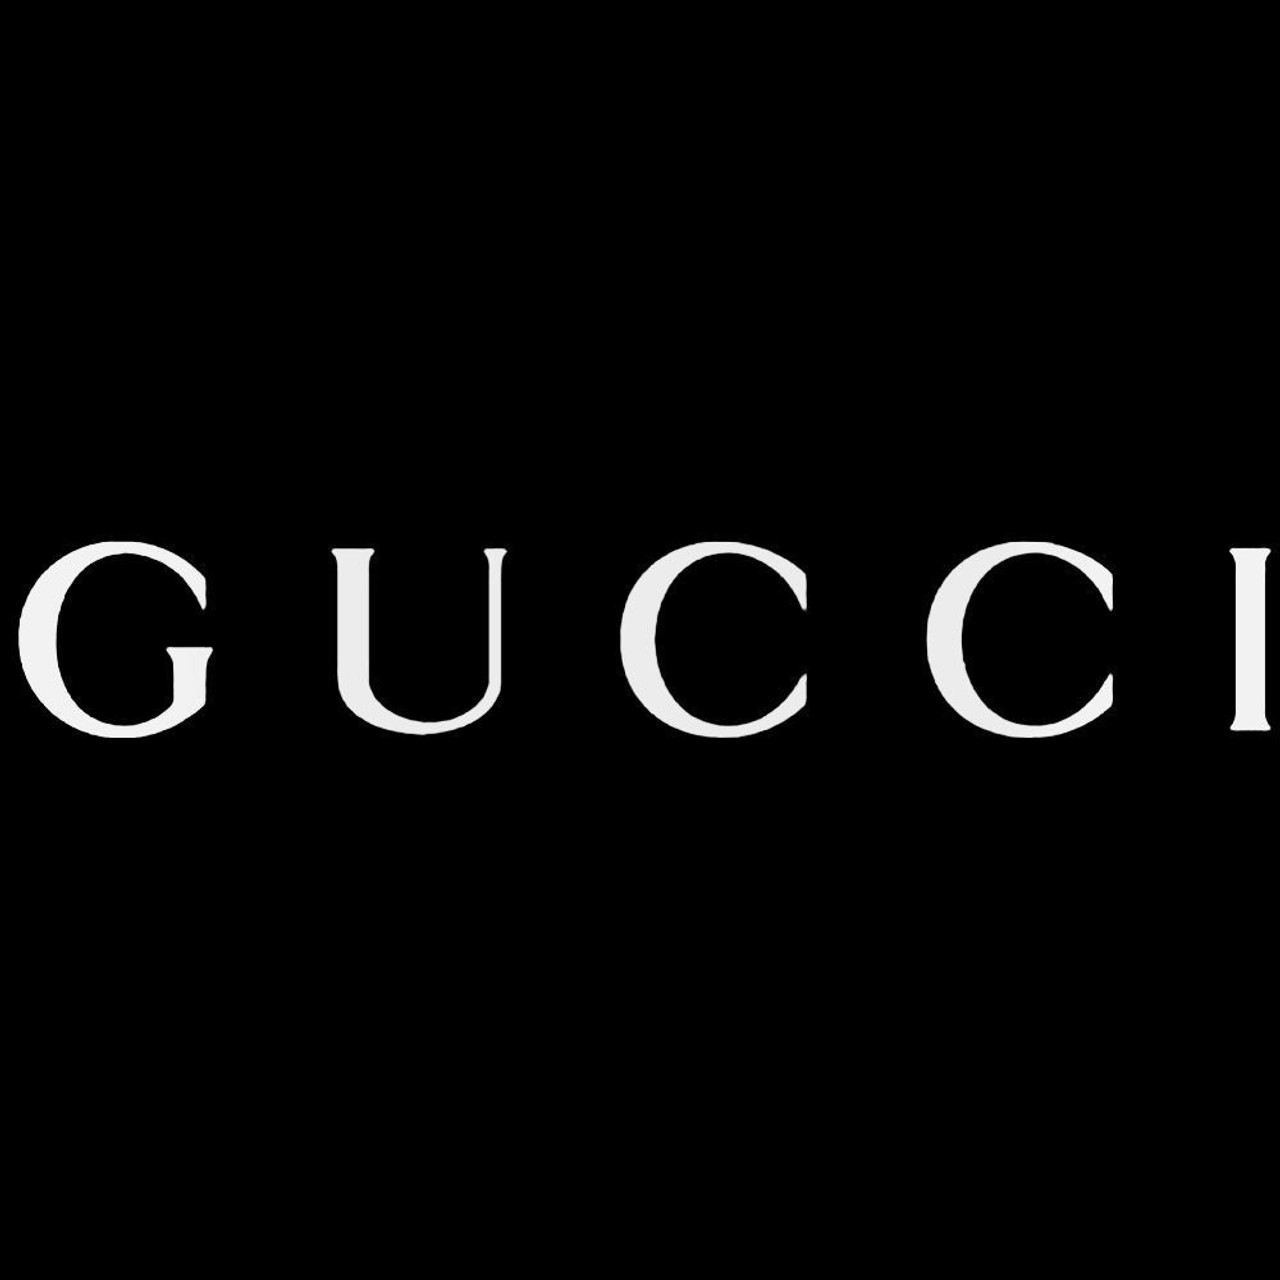 Gucci надпись на темном